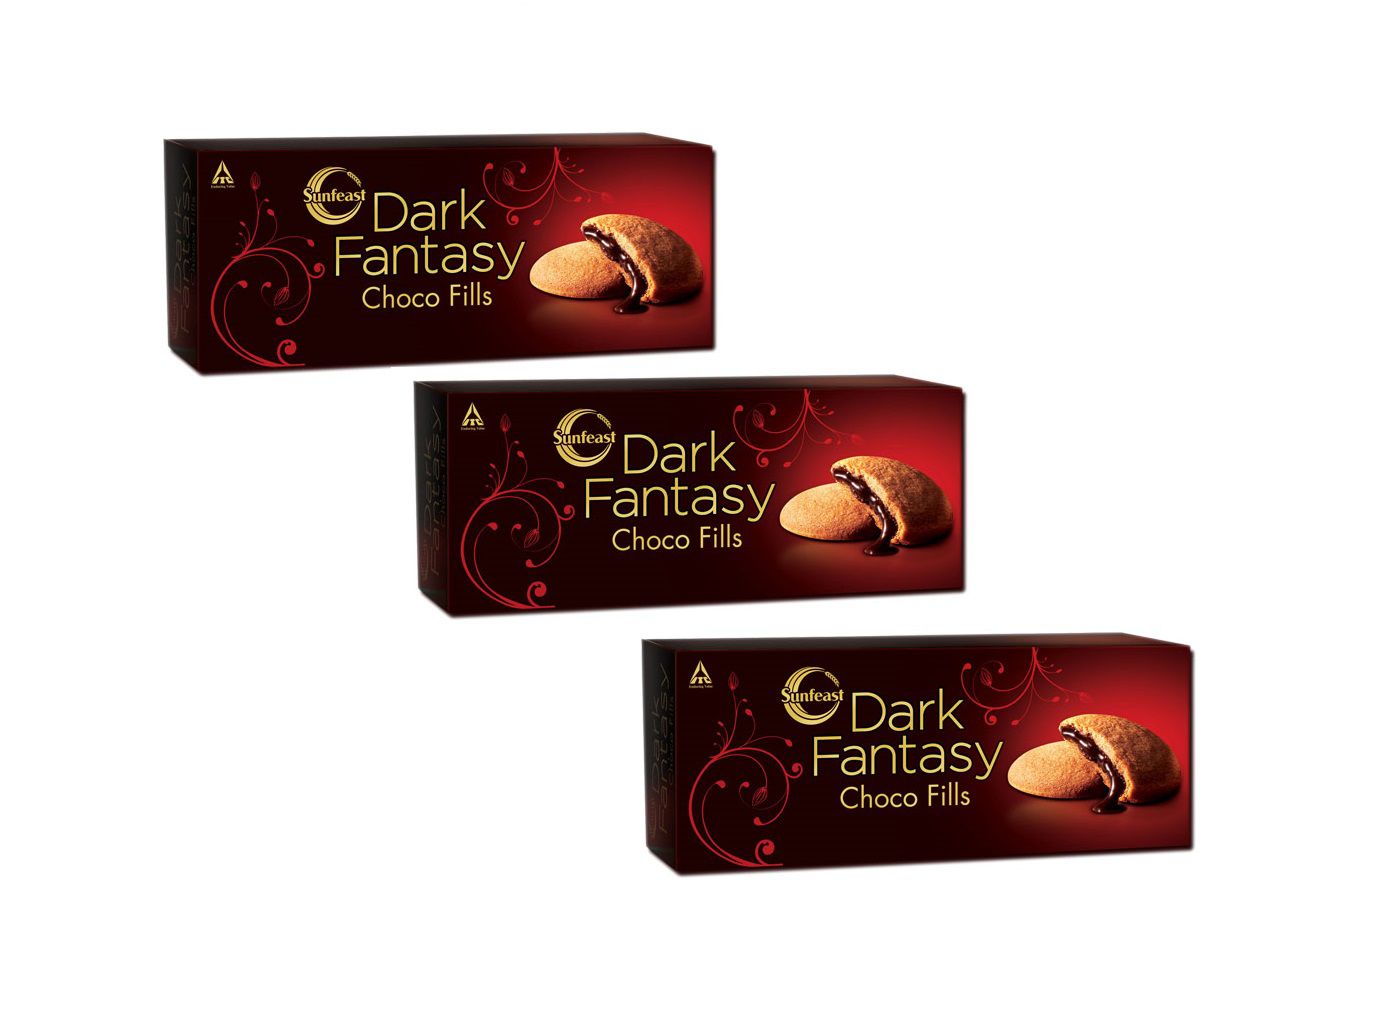 Sunfeast Dark Fantasy Choco Fills Cookie - Pack of 3